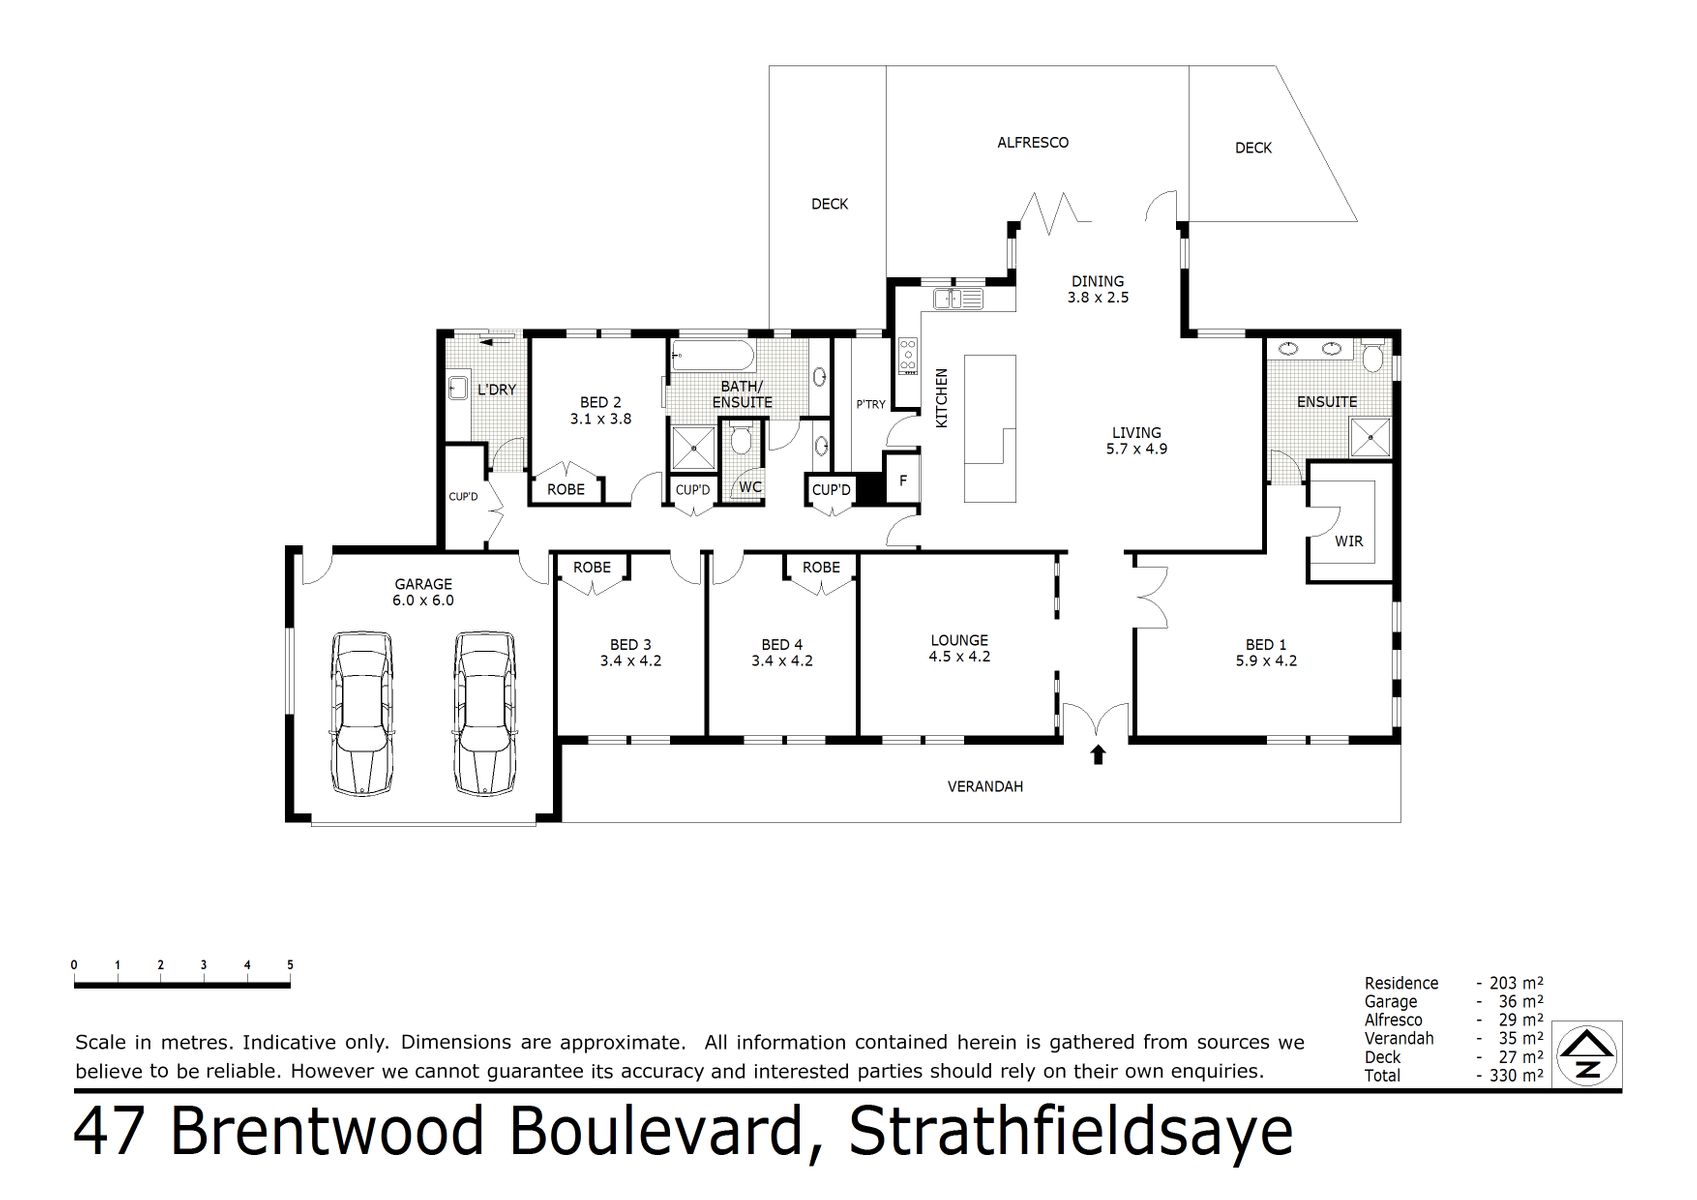 47 Brentwood Boulevard Strathfieldsaye (18 DEC 2020) 239sqm